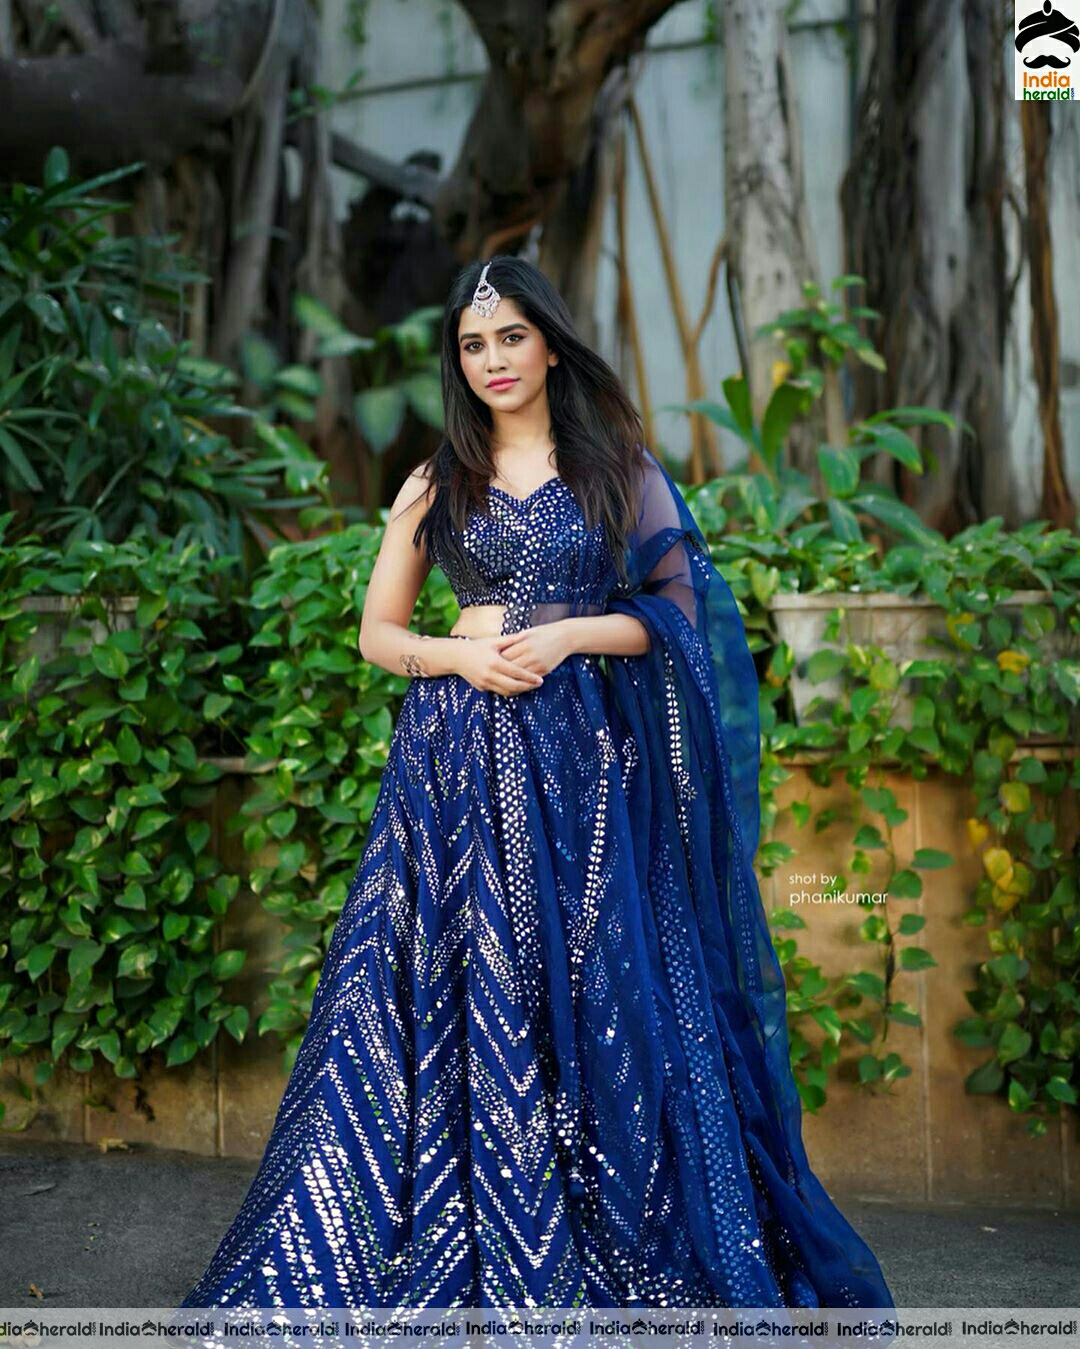 Nabha looking tempting in Royal Blue attire